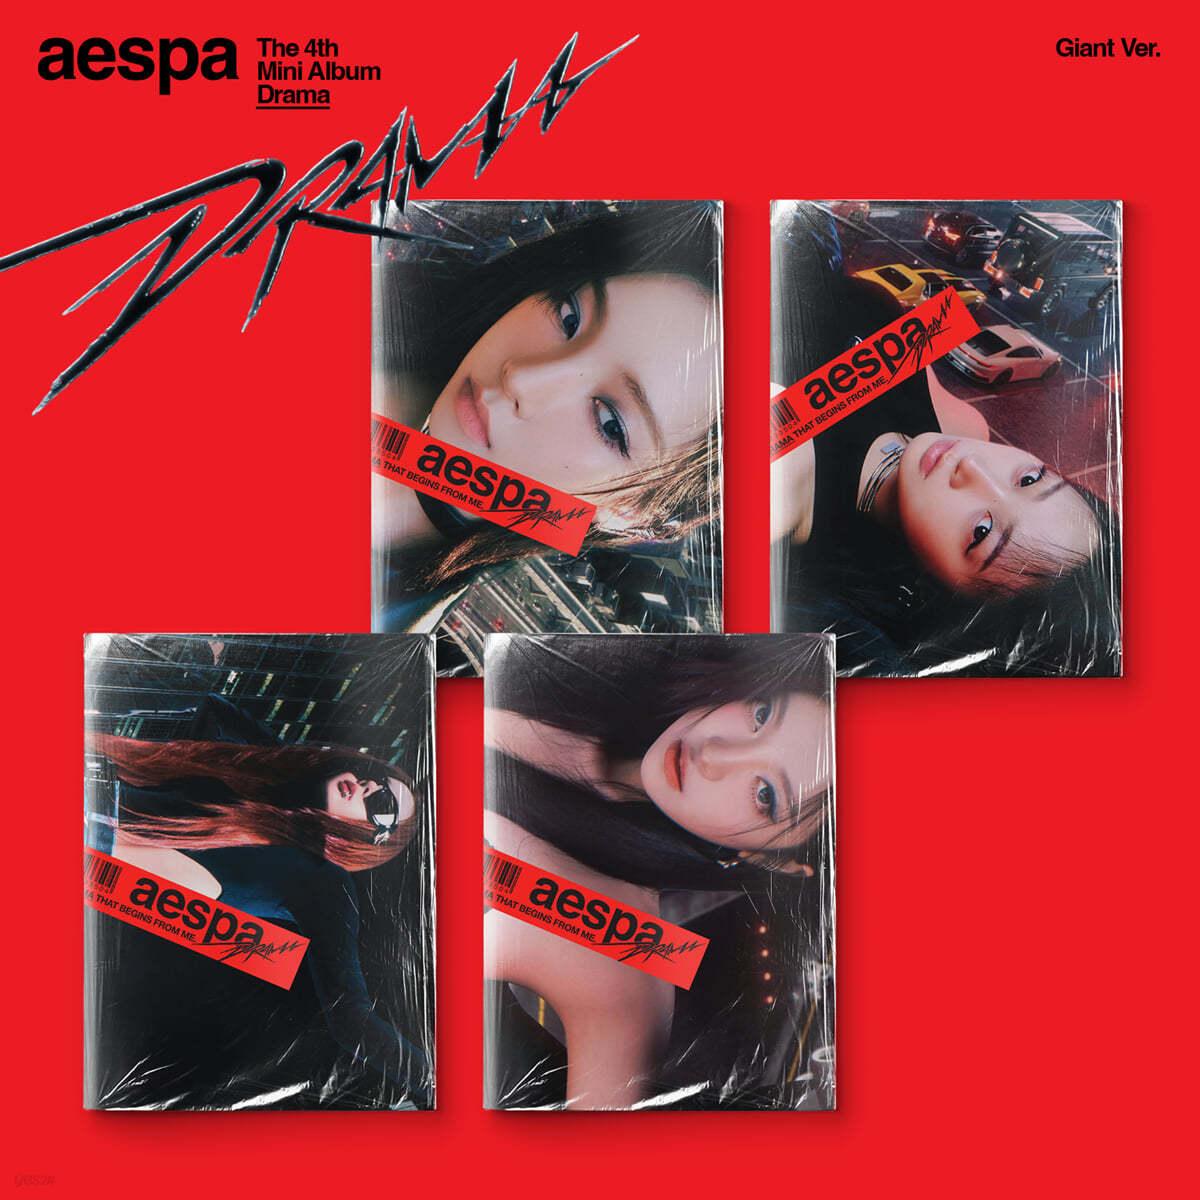 AESPA 4th Mini Album 'Drama' (Giant Ver.) - KKANG